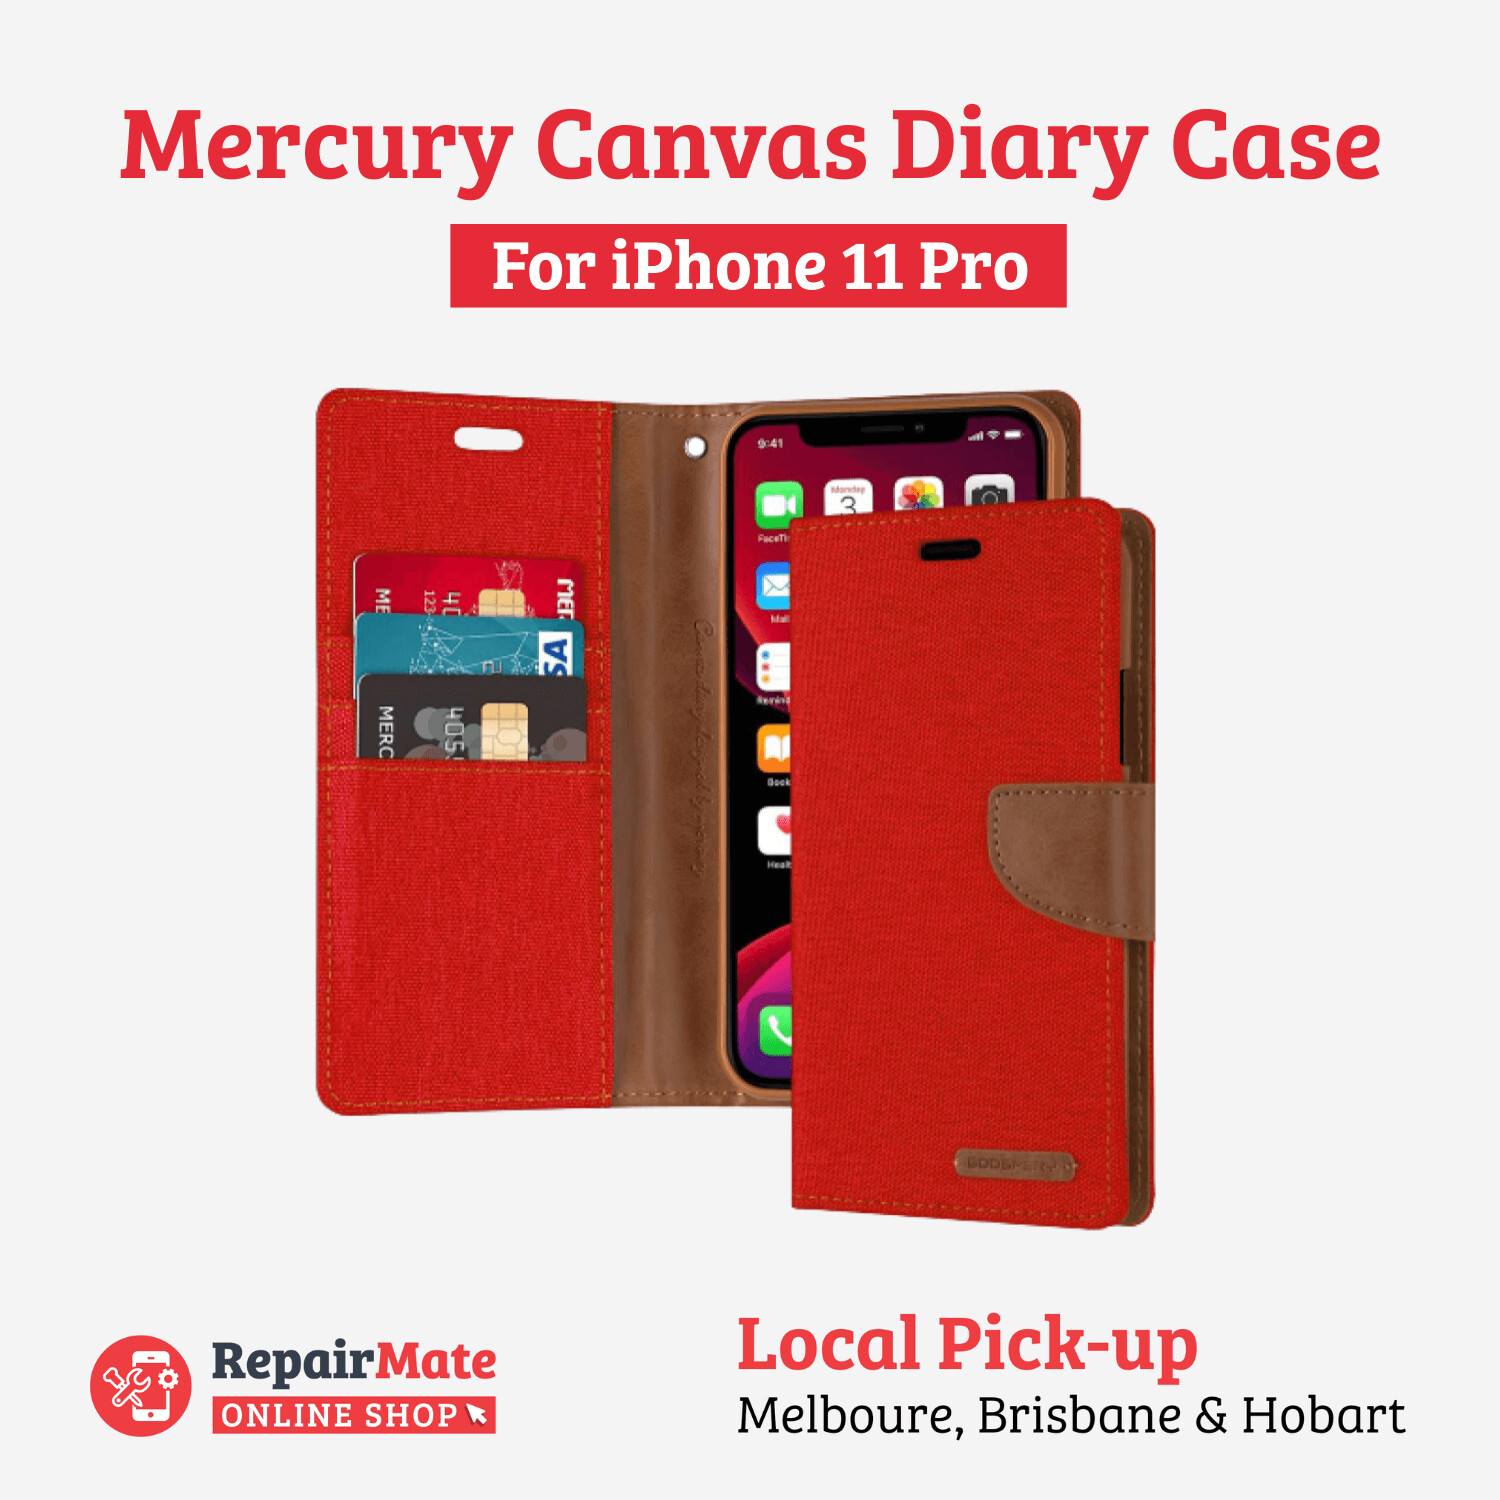 iPhone 11 Pro Mercury Canvas Foldable Diary Case